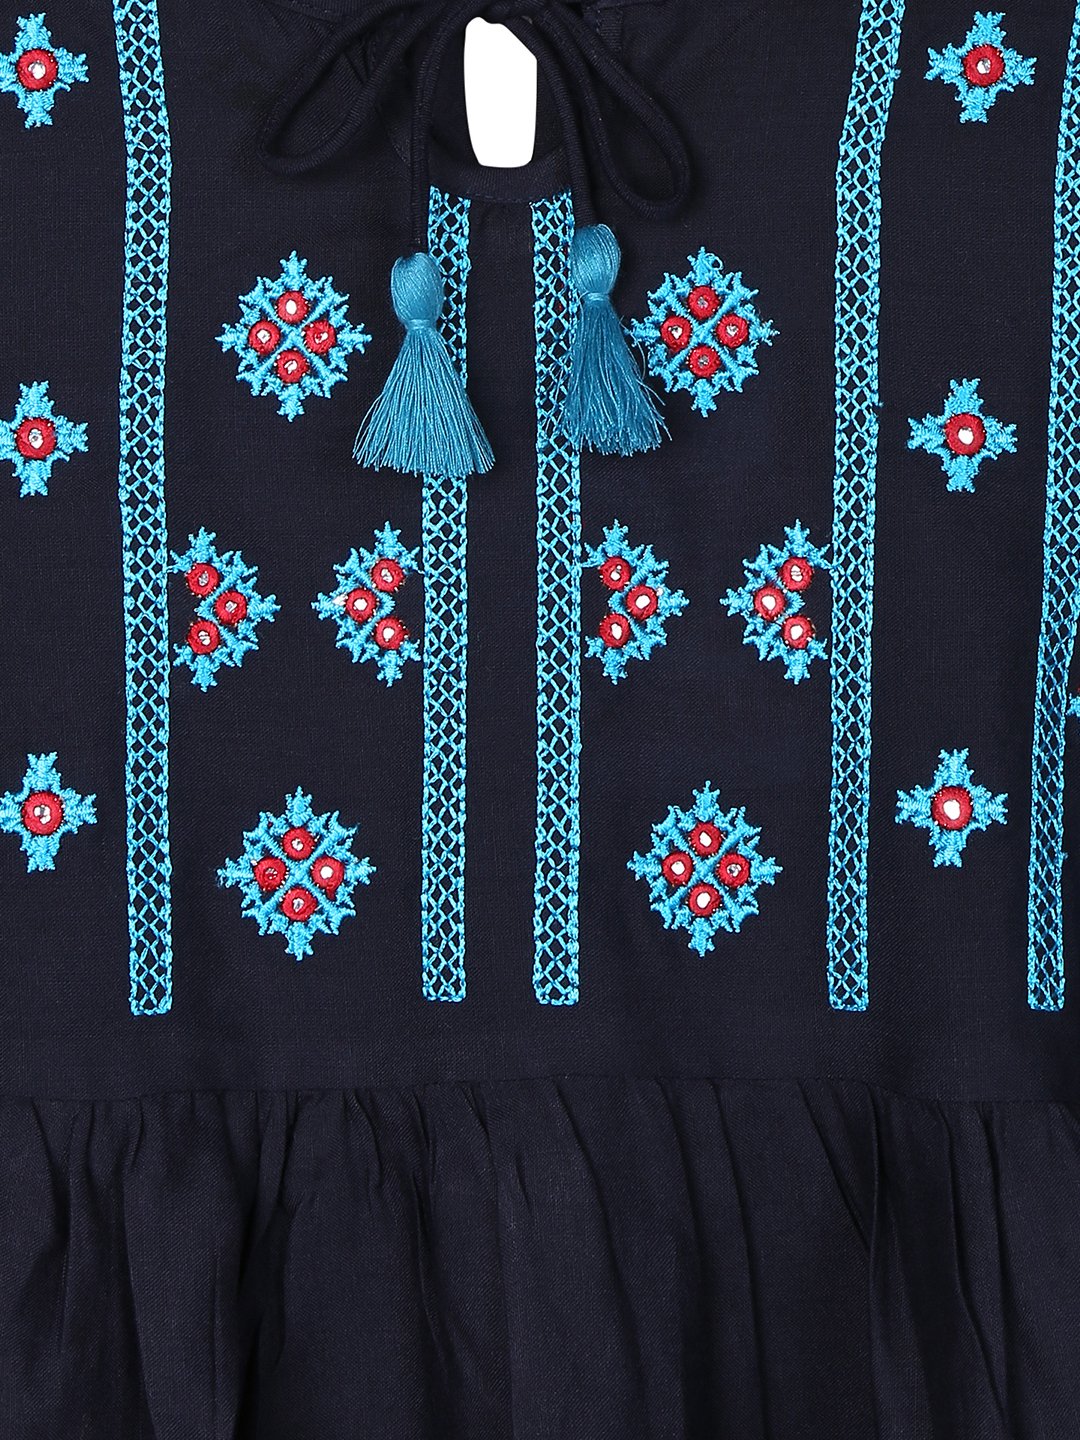 Ishin Girls Viscose Rayon Navy Blue Embroidered Top